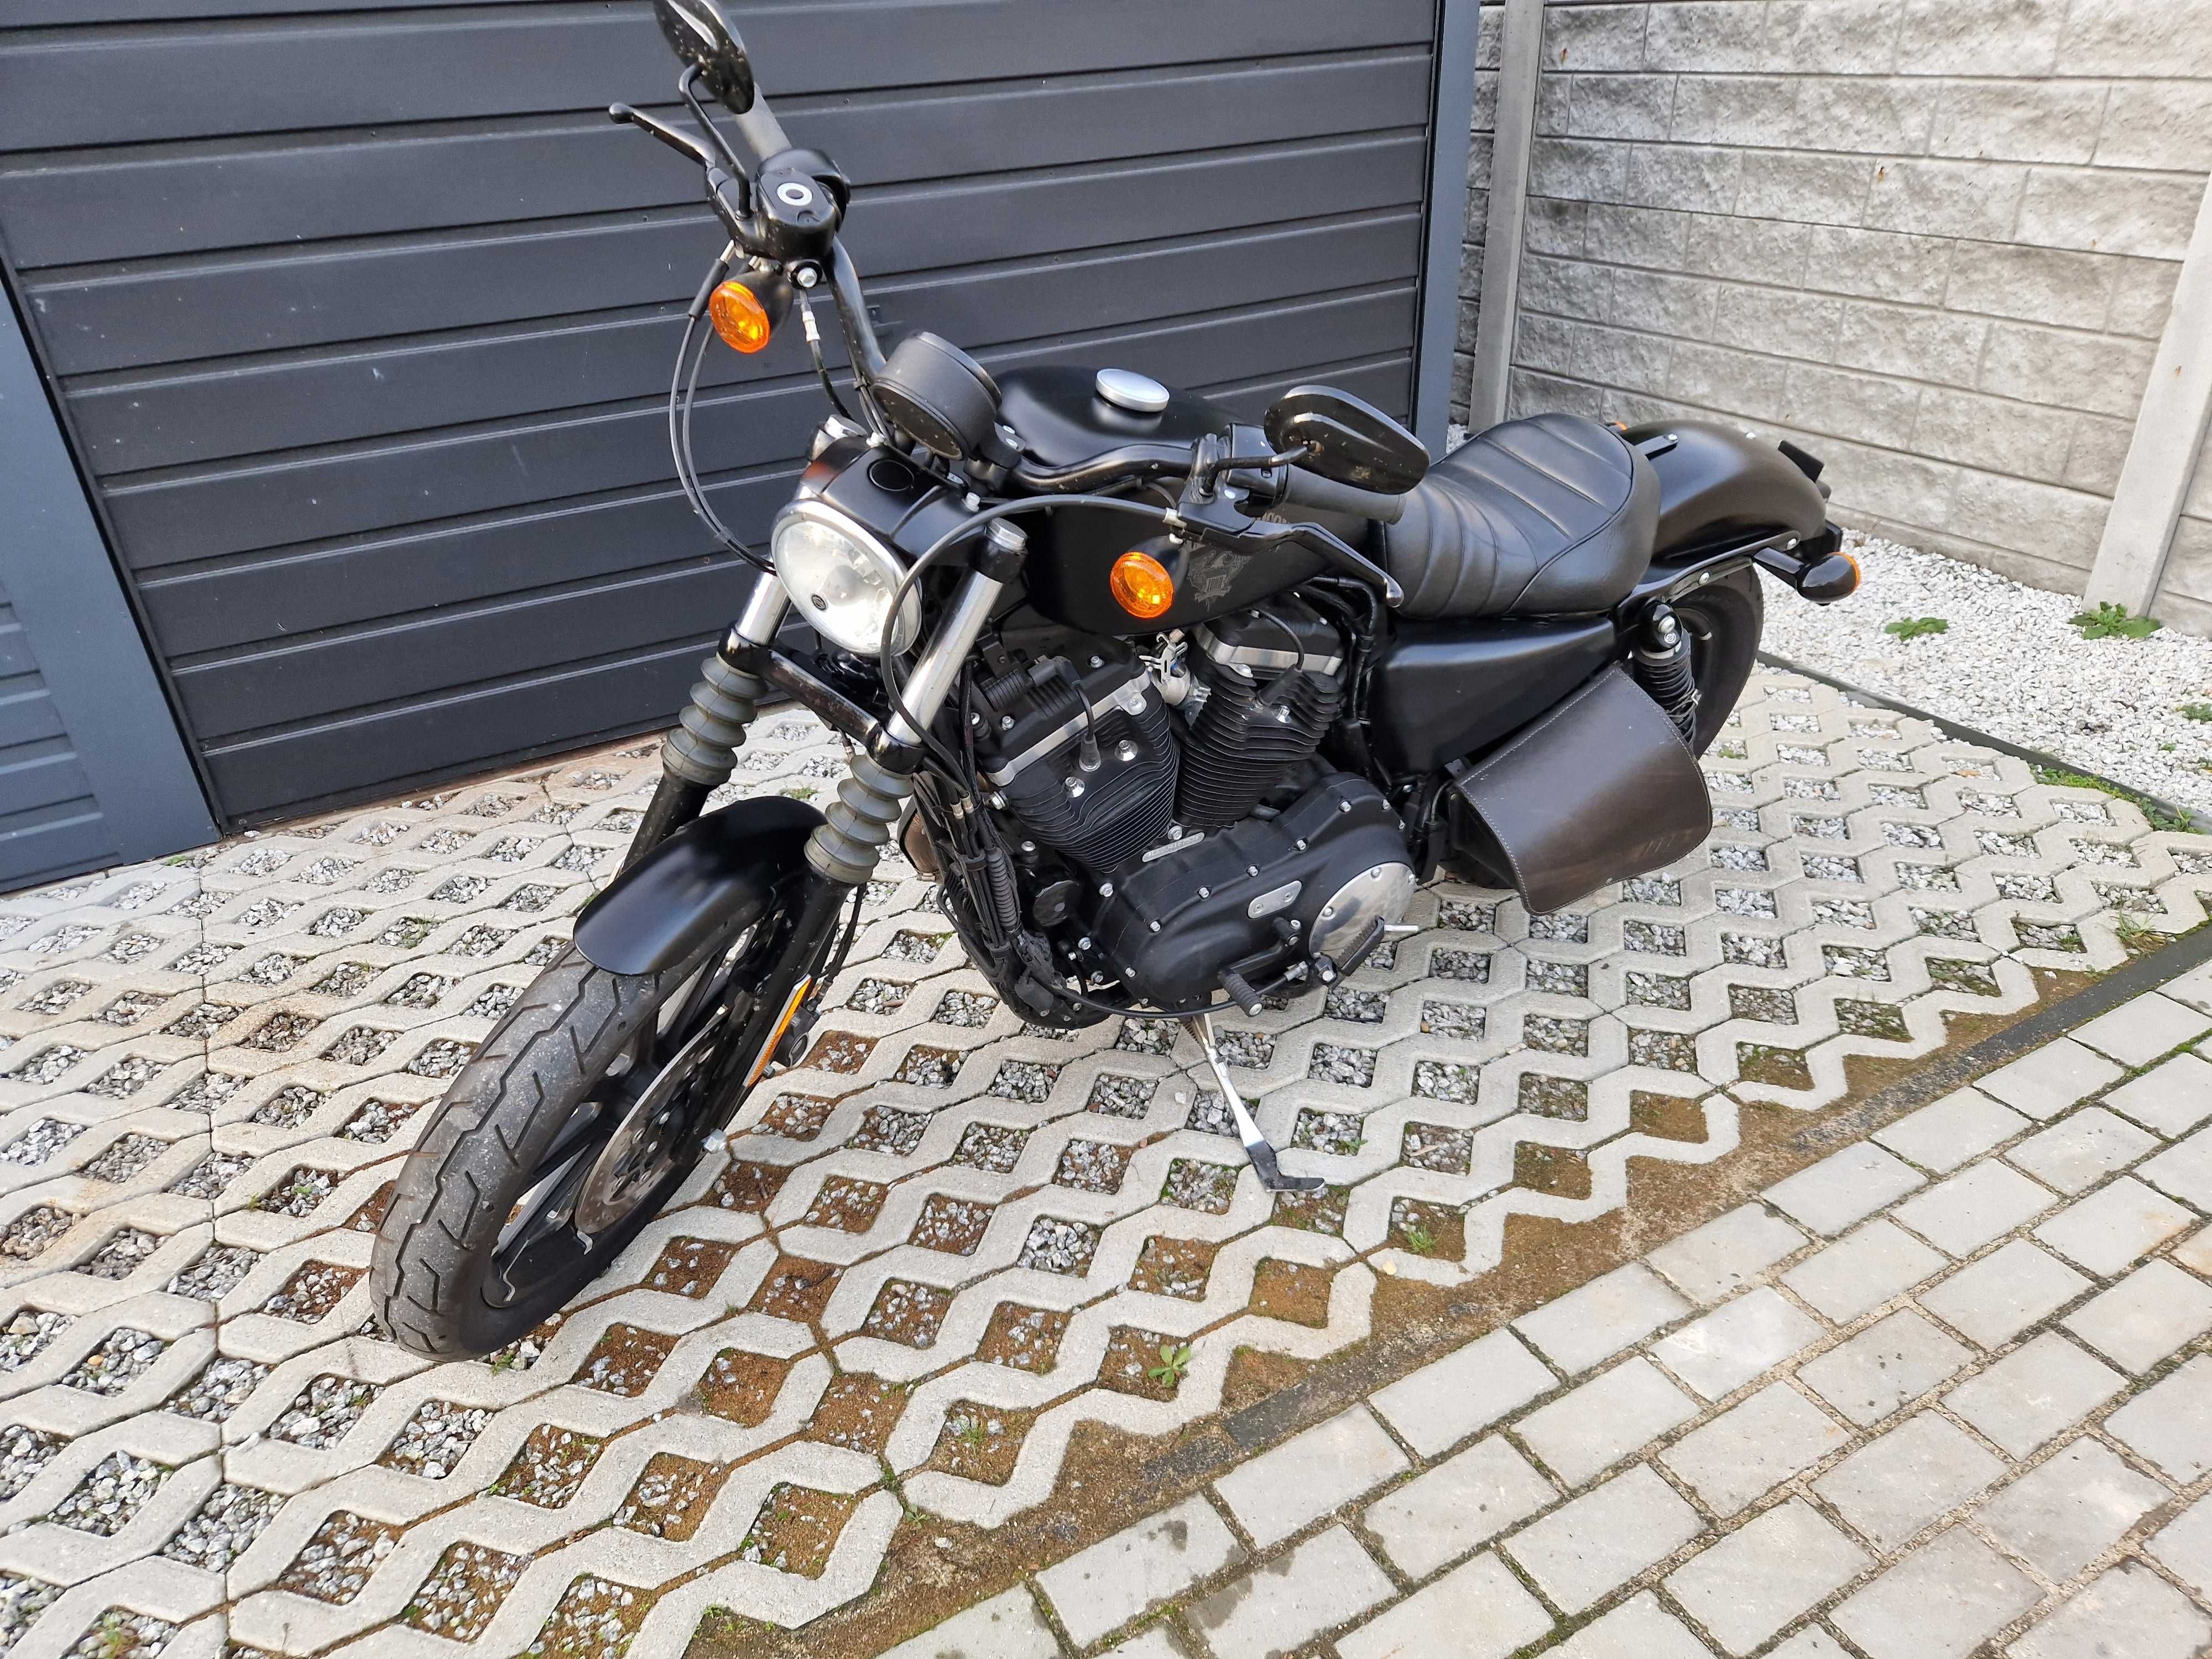 Harley Davidson Iron 2018r Salon Polska. Przeb.5900km.